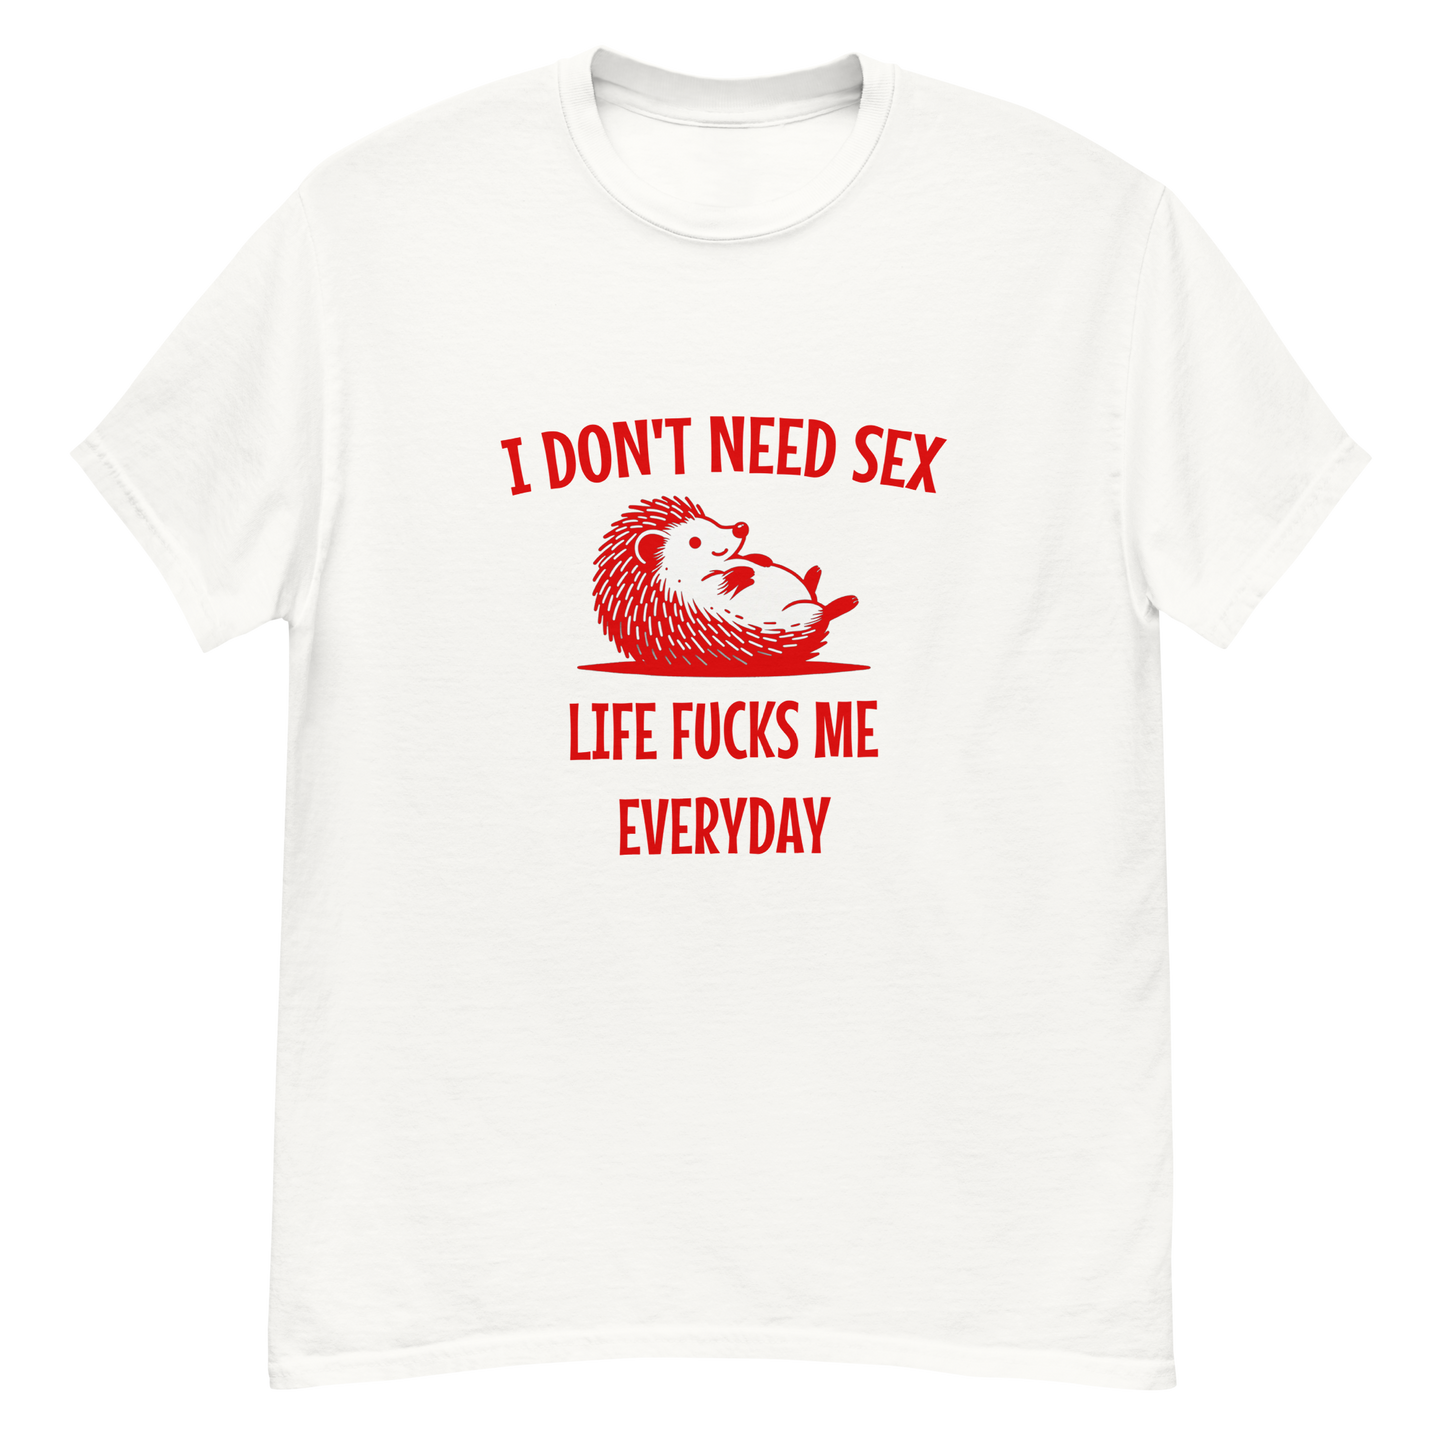 I don't need sex life fucks me everyday